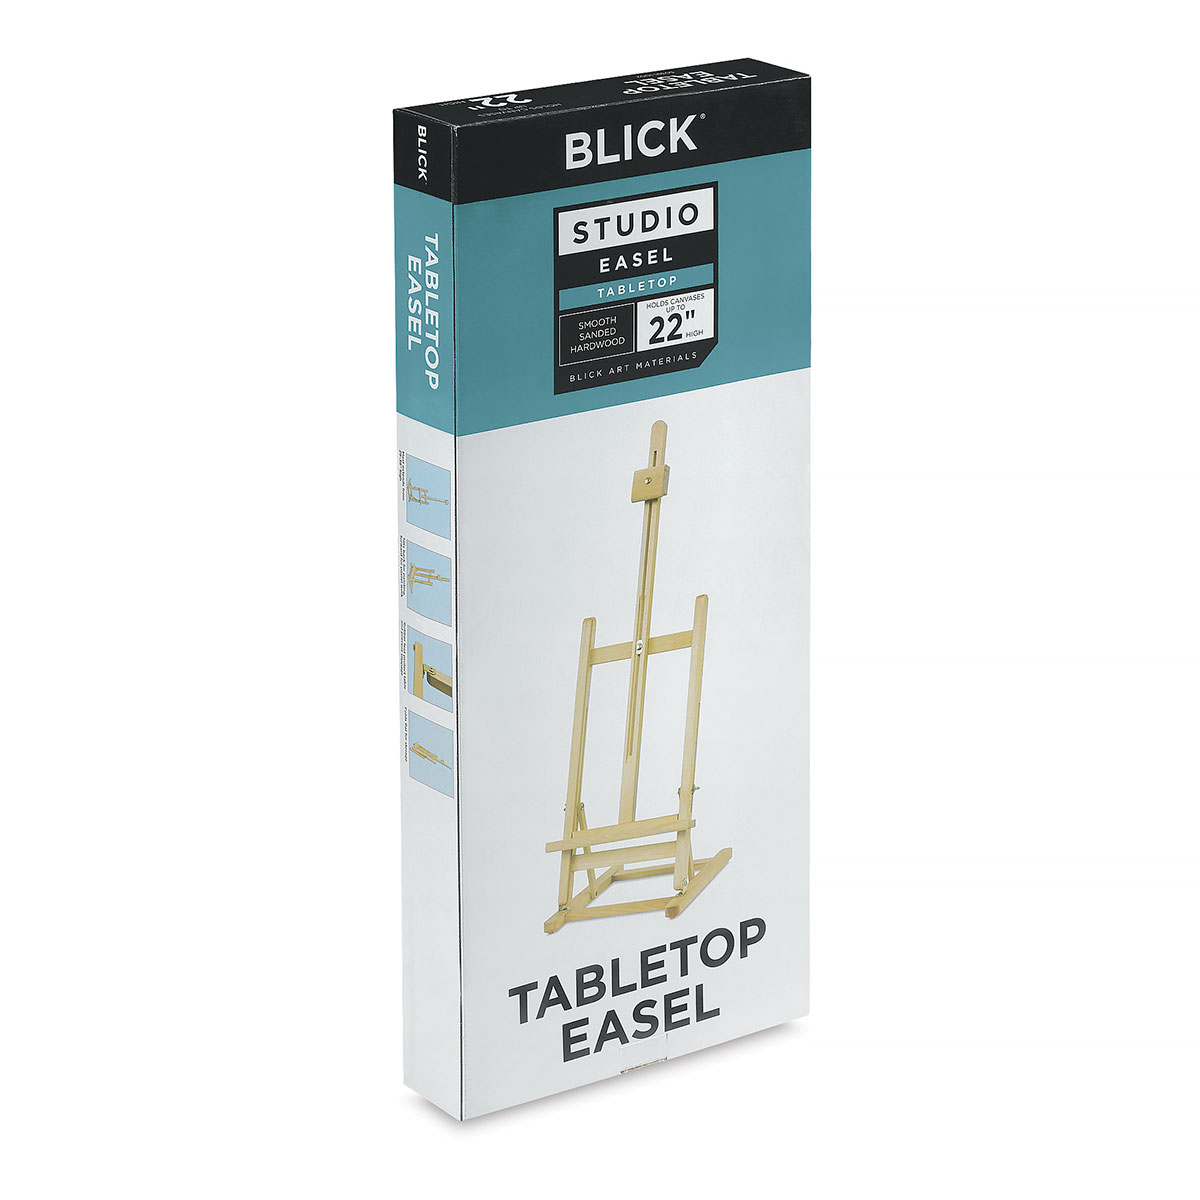 Blick Studio Display Easel - Black, Tabletop